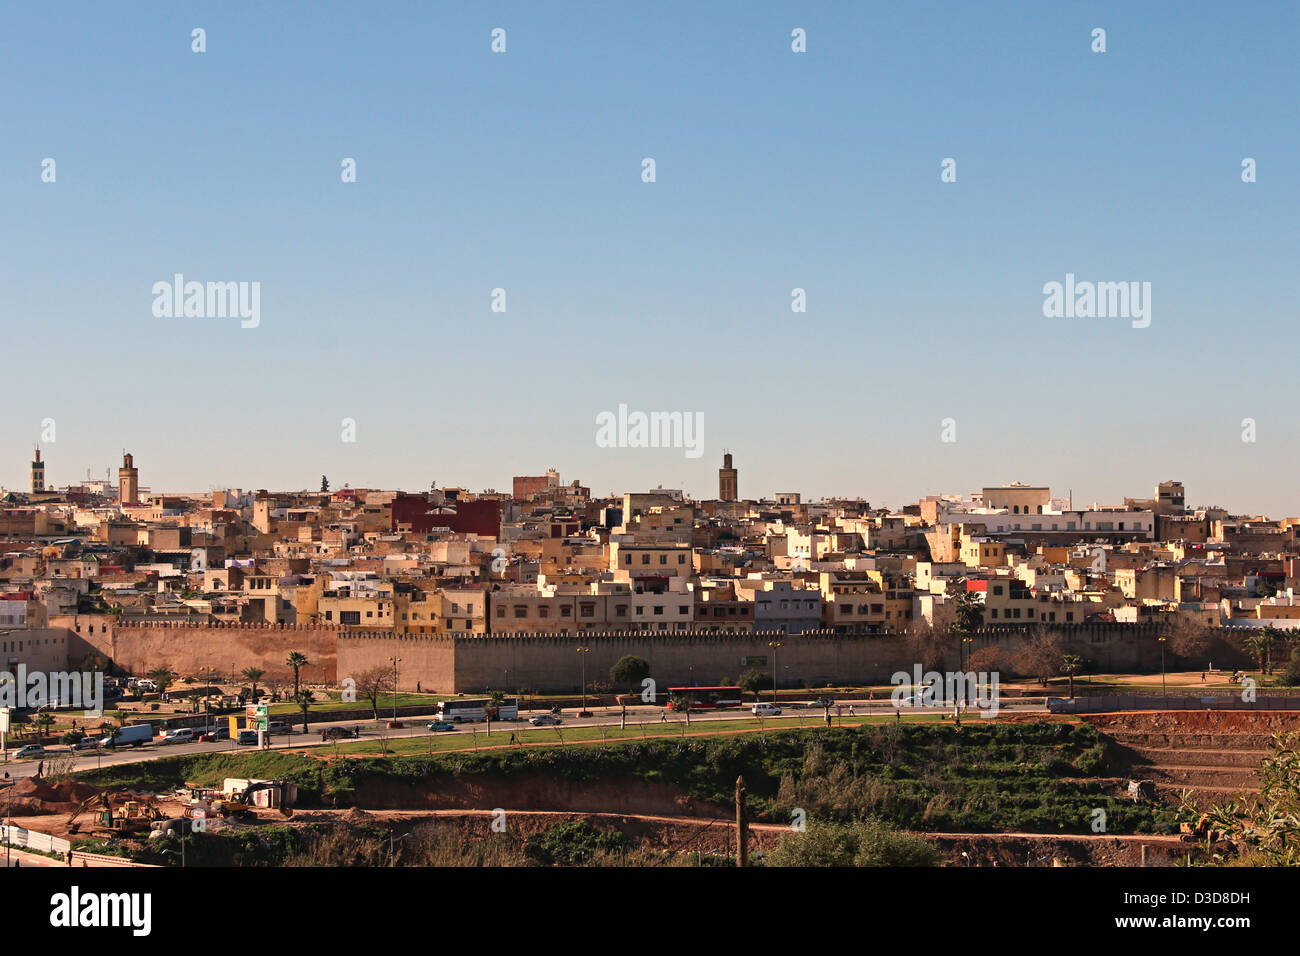 The Almedina Fez was declared UNESCO World Heritage Site in 1981. Stock Photo